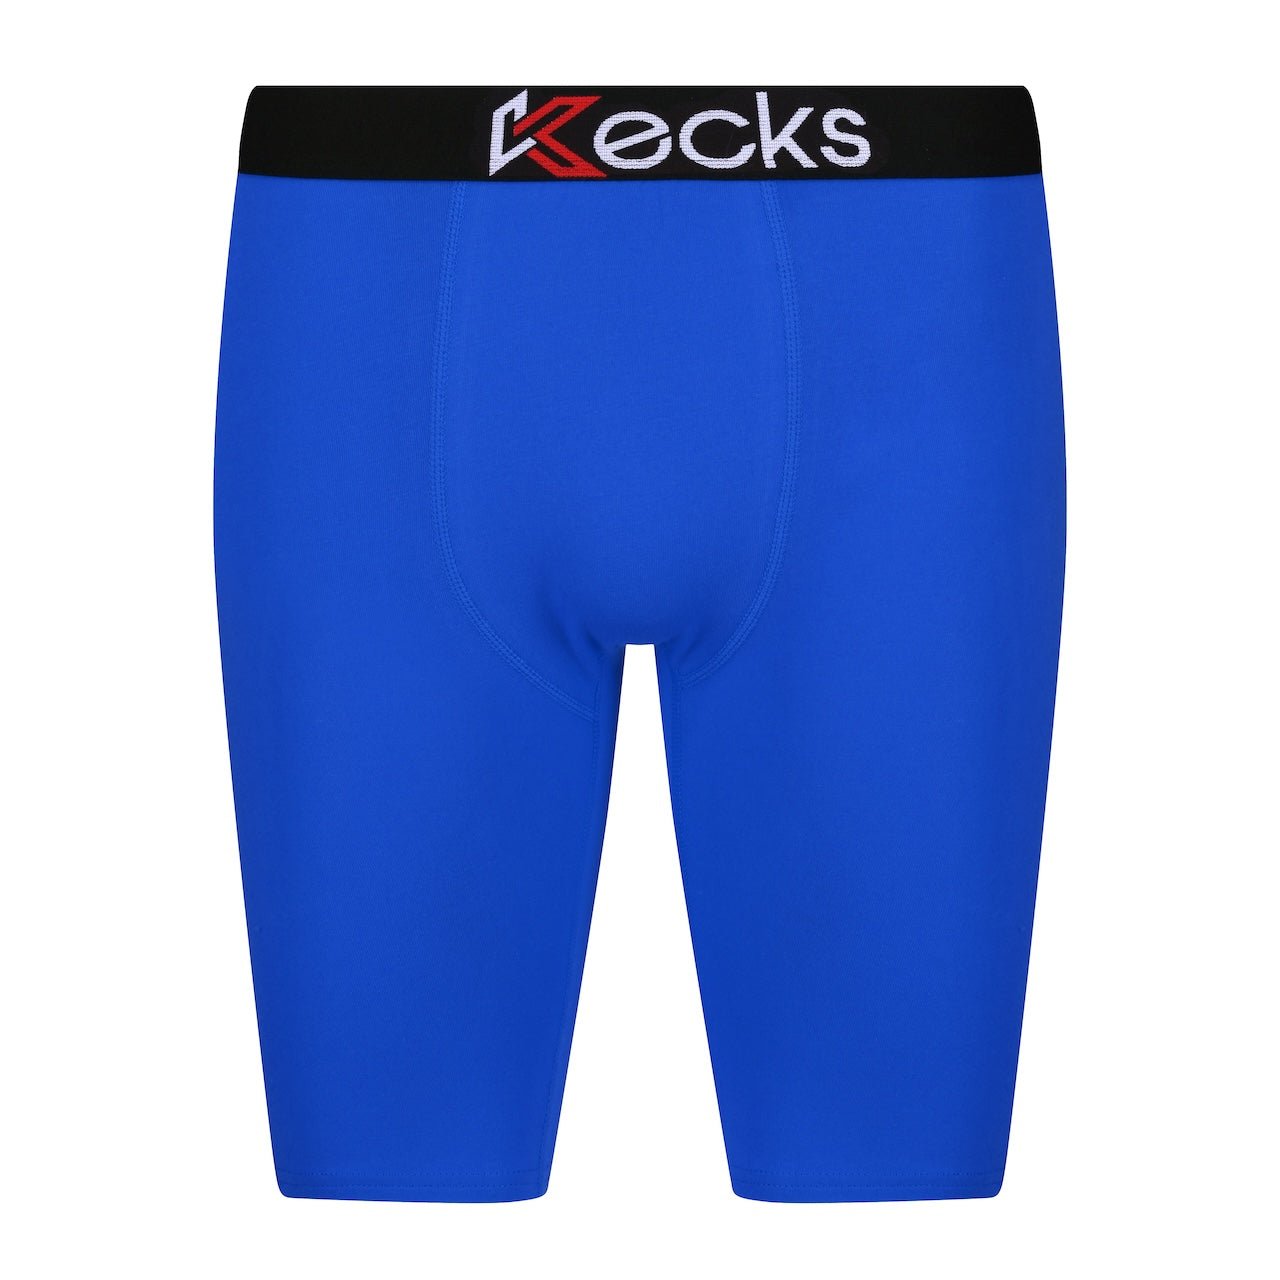 3 Pack Blue Boxer Shorts - Kecks